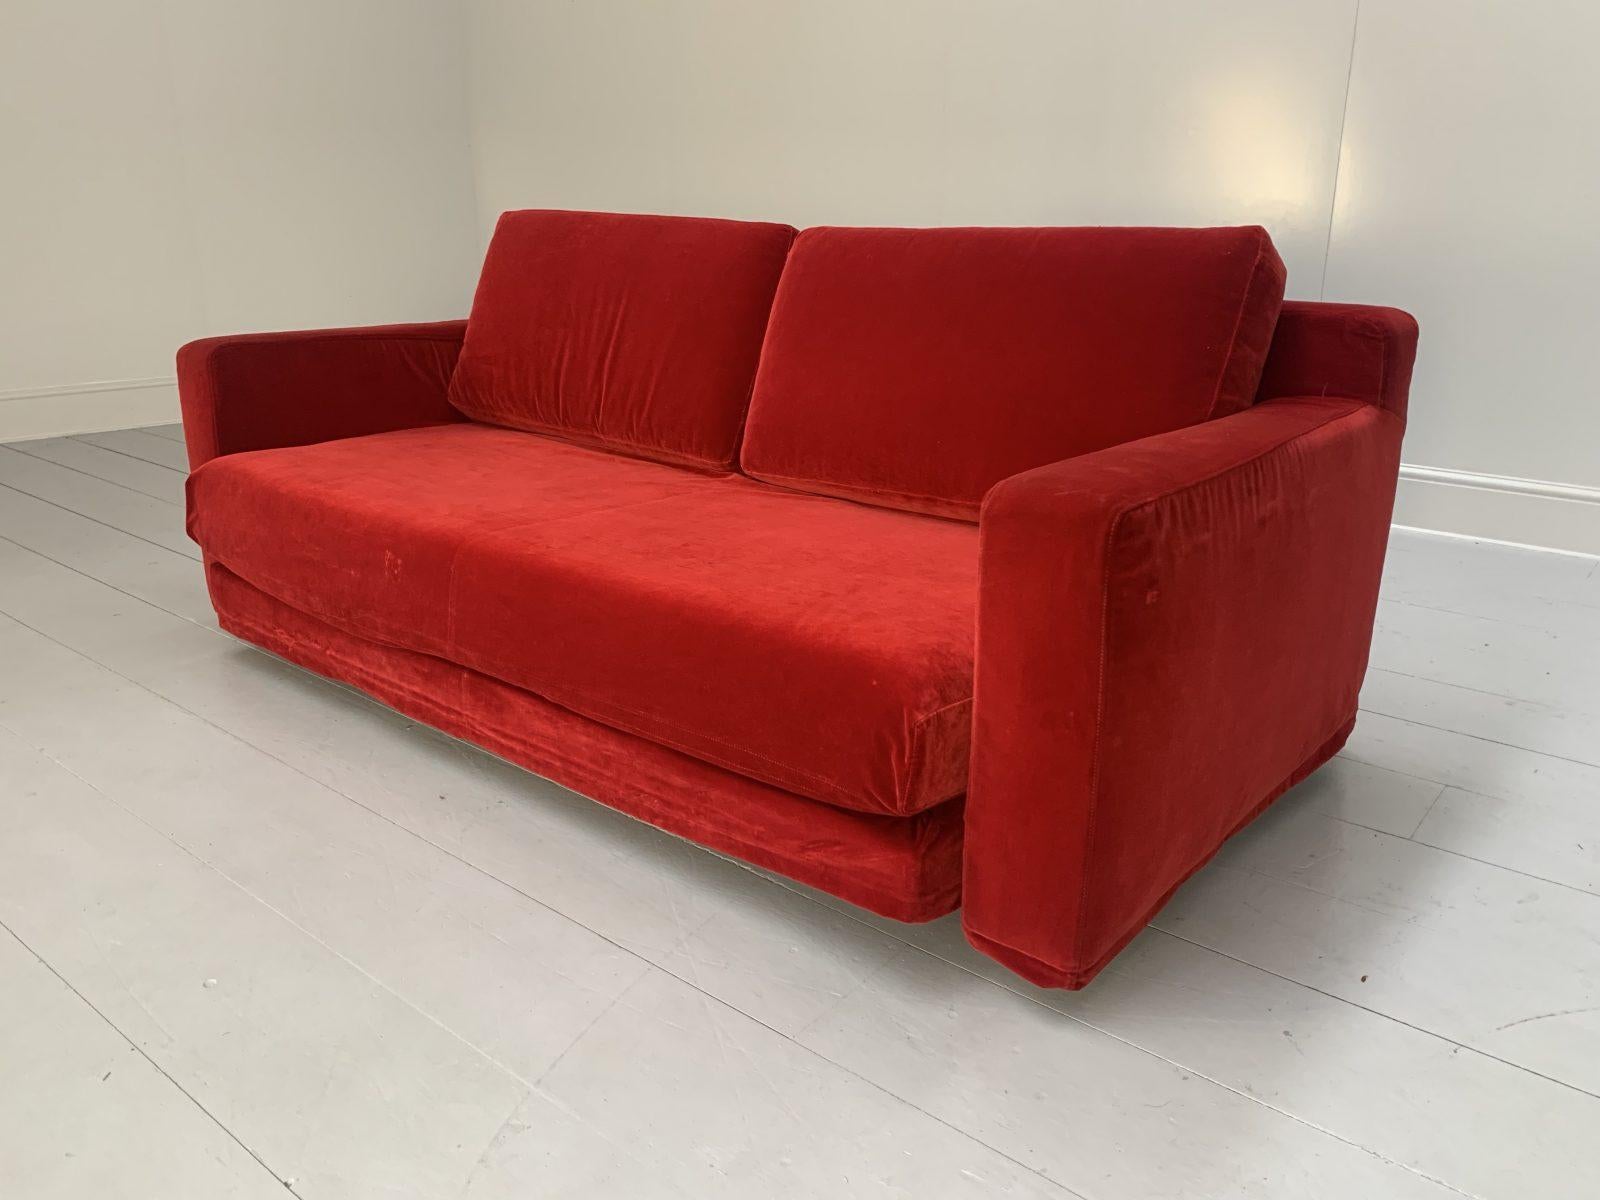 Contemporary Flexform “Winny” Large 2.5-Seat Sofa-Bed in Red Velvet